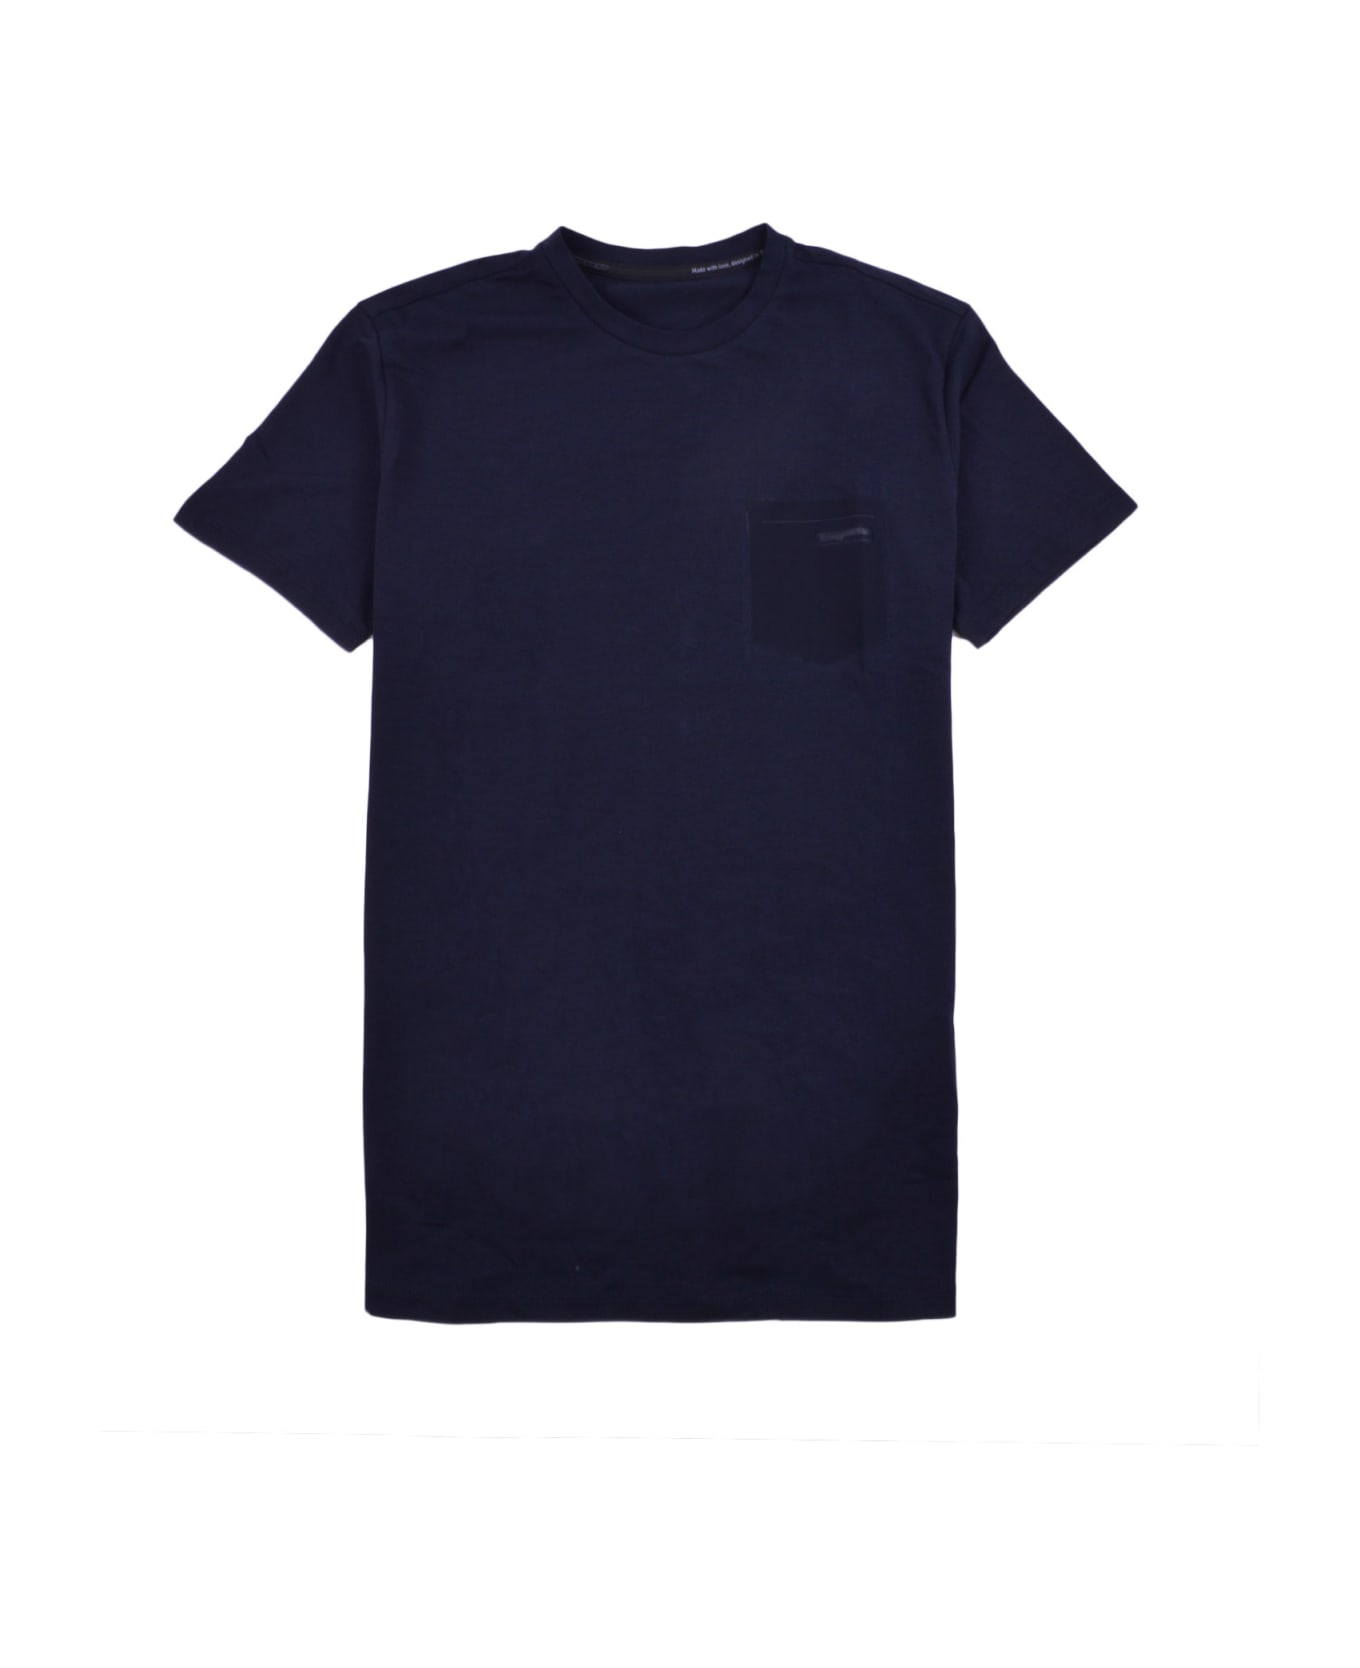 RRD - Roberto Ricci Design T-shirt - Blue Black